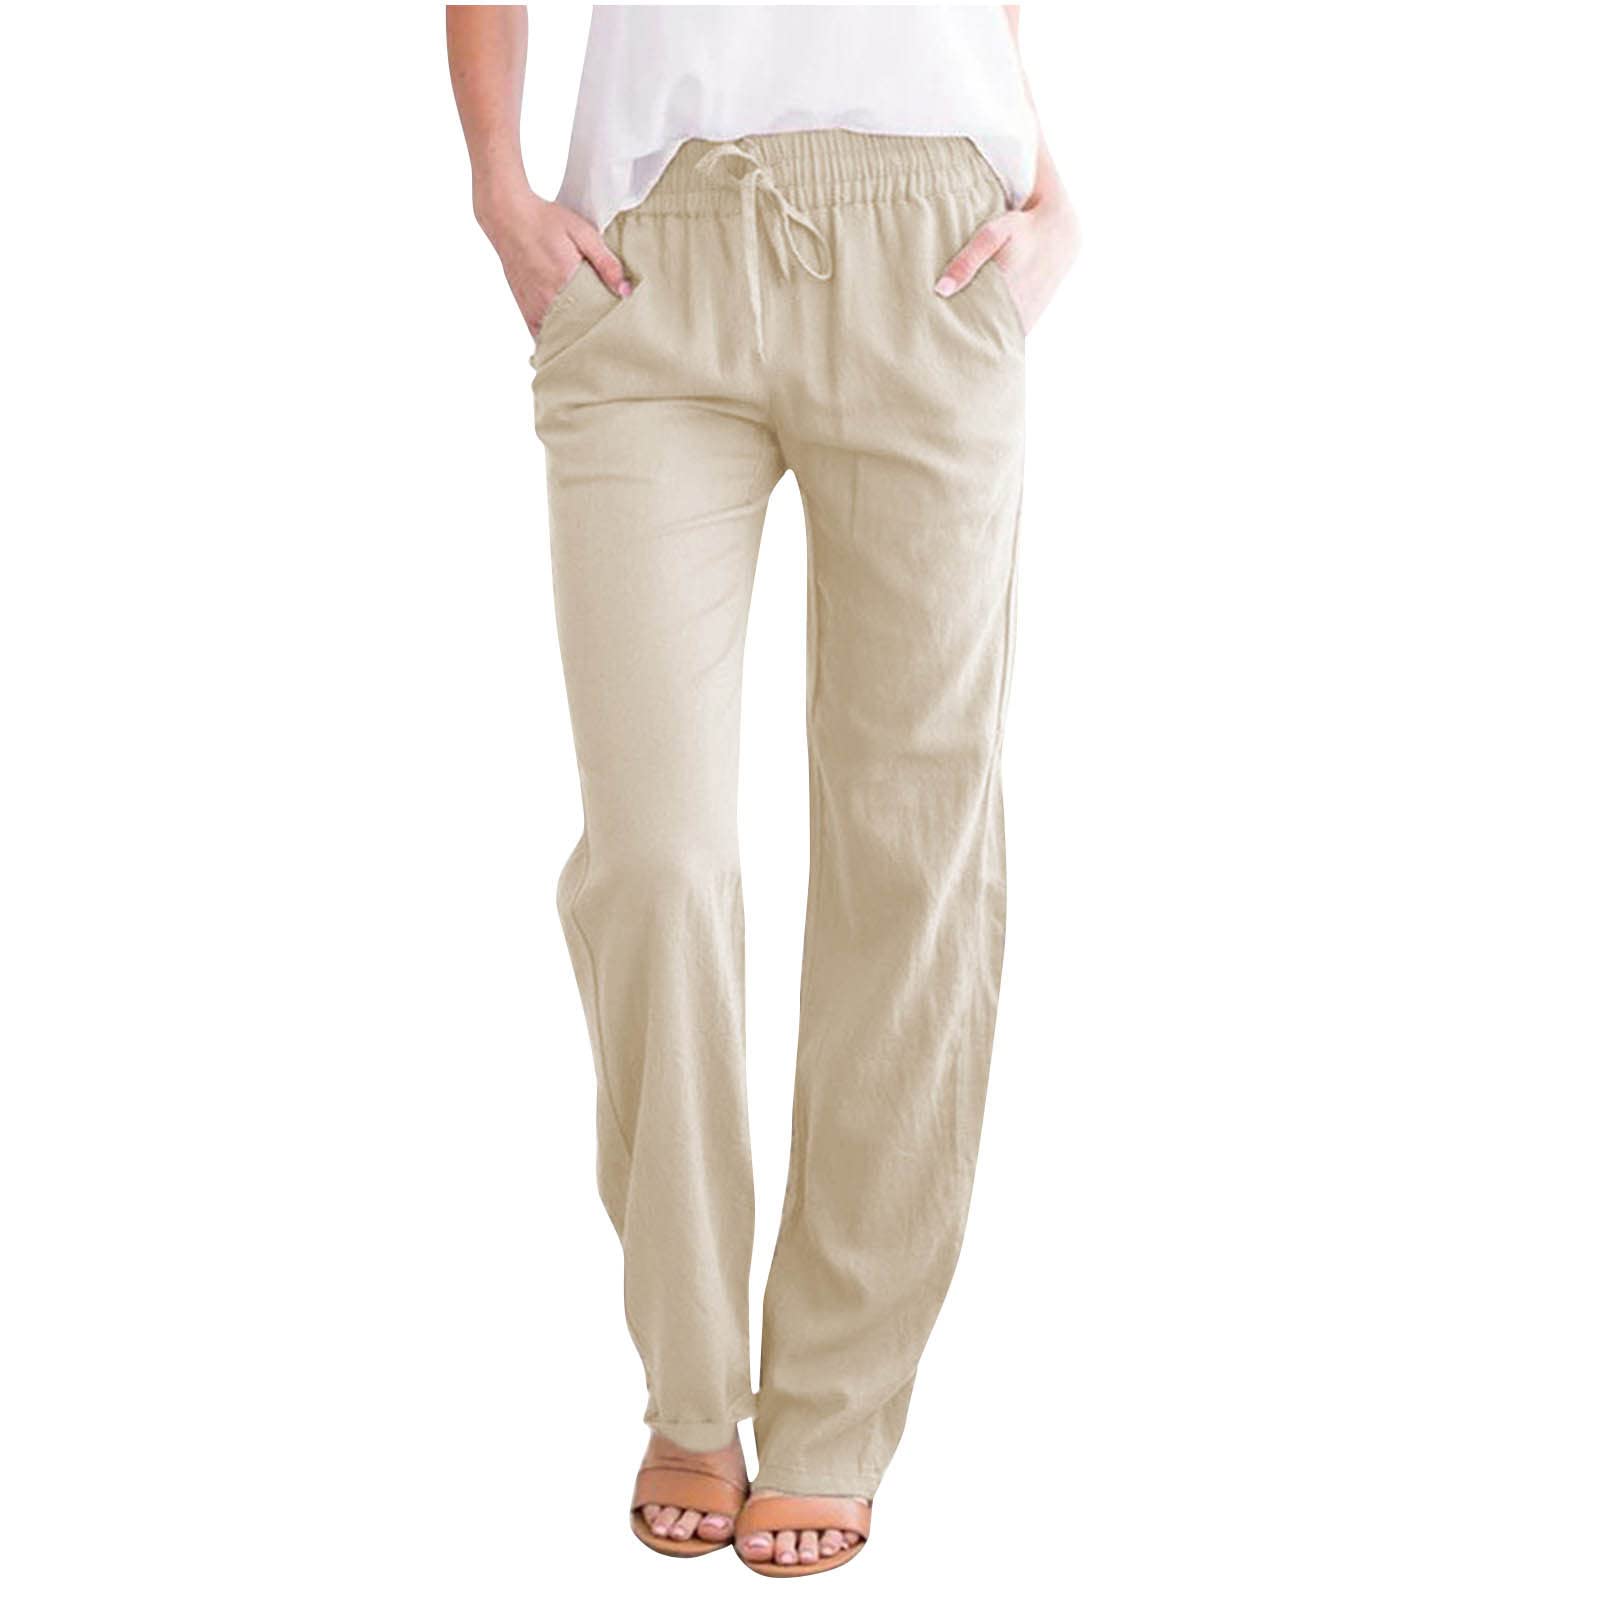 Pants Elastic Cotton Women Summer